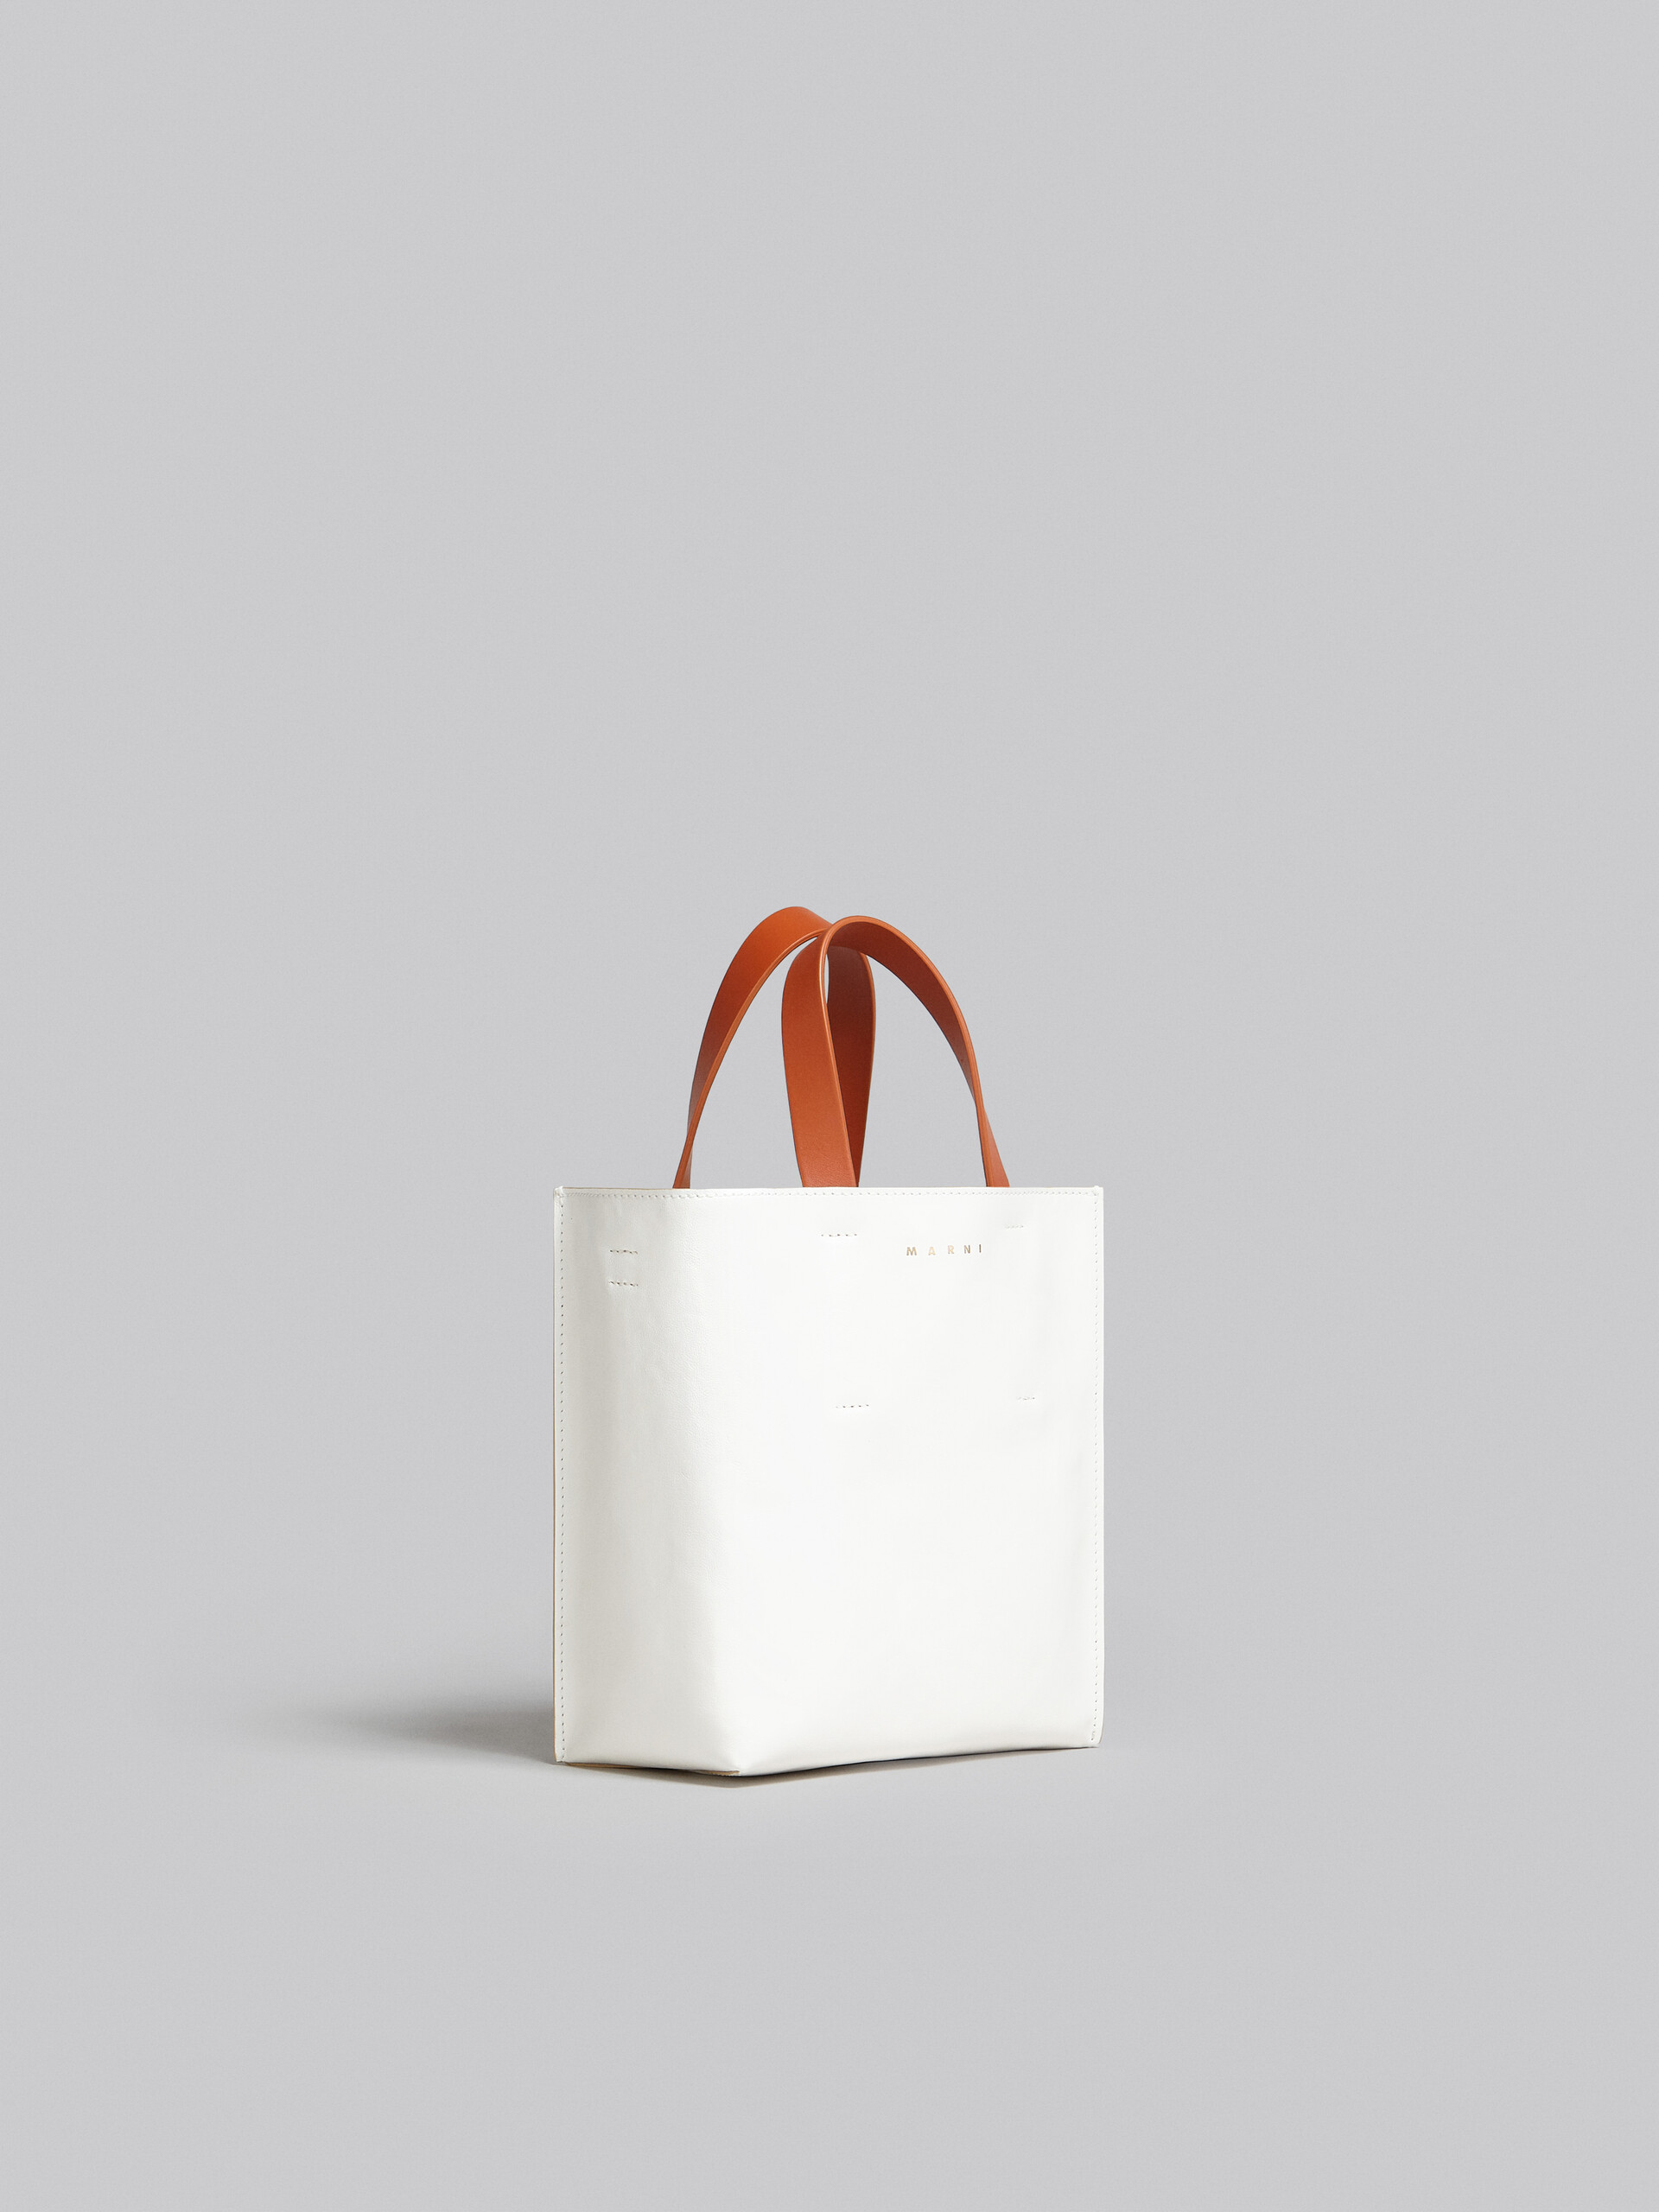 Museo Soft Bag Mini in pelle grigia nera e bordeaux - Borse shopping - Image 6